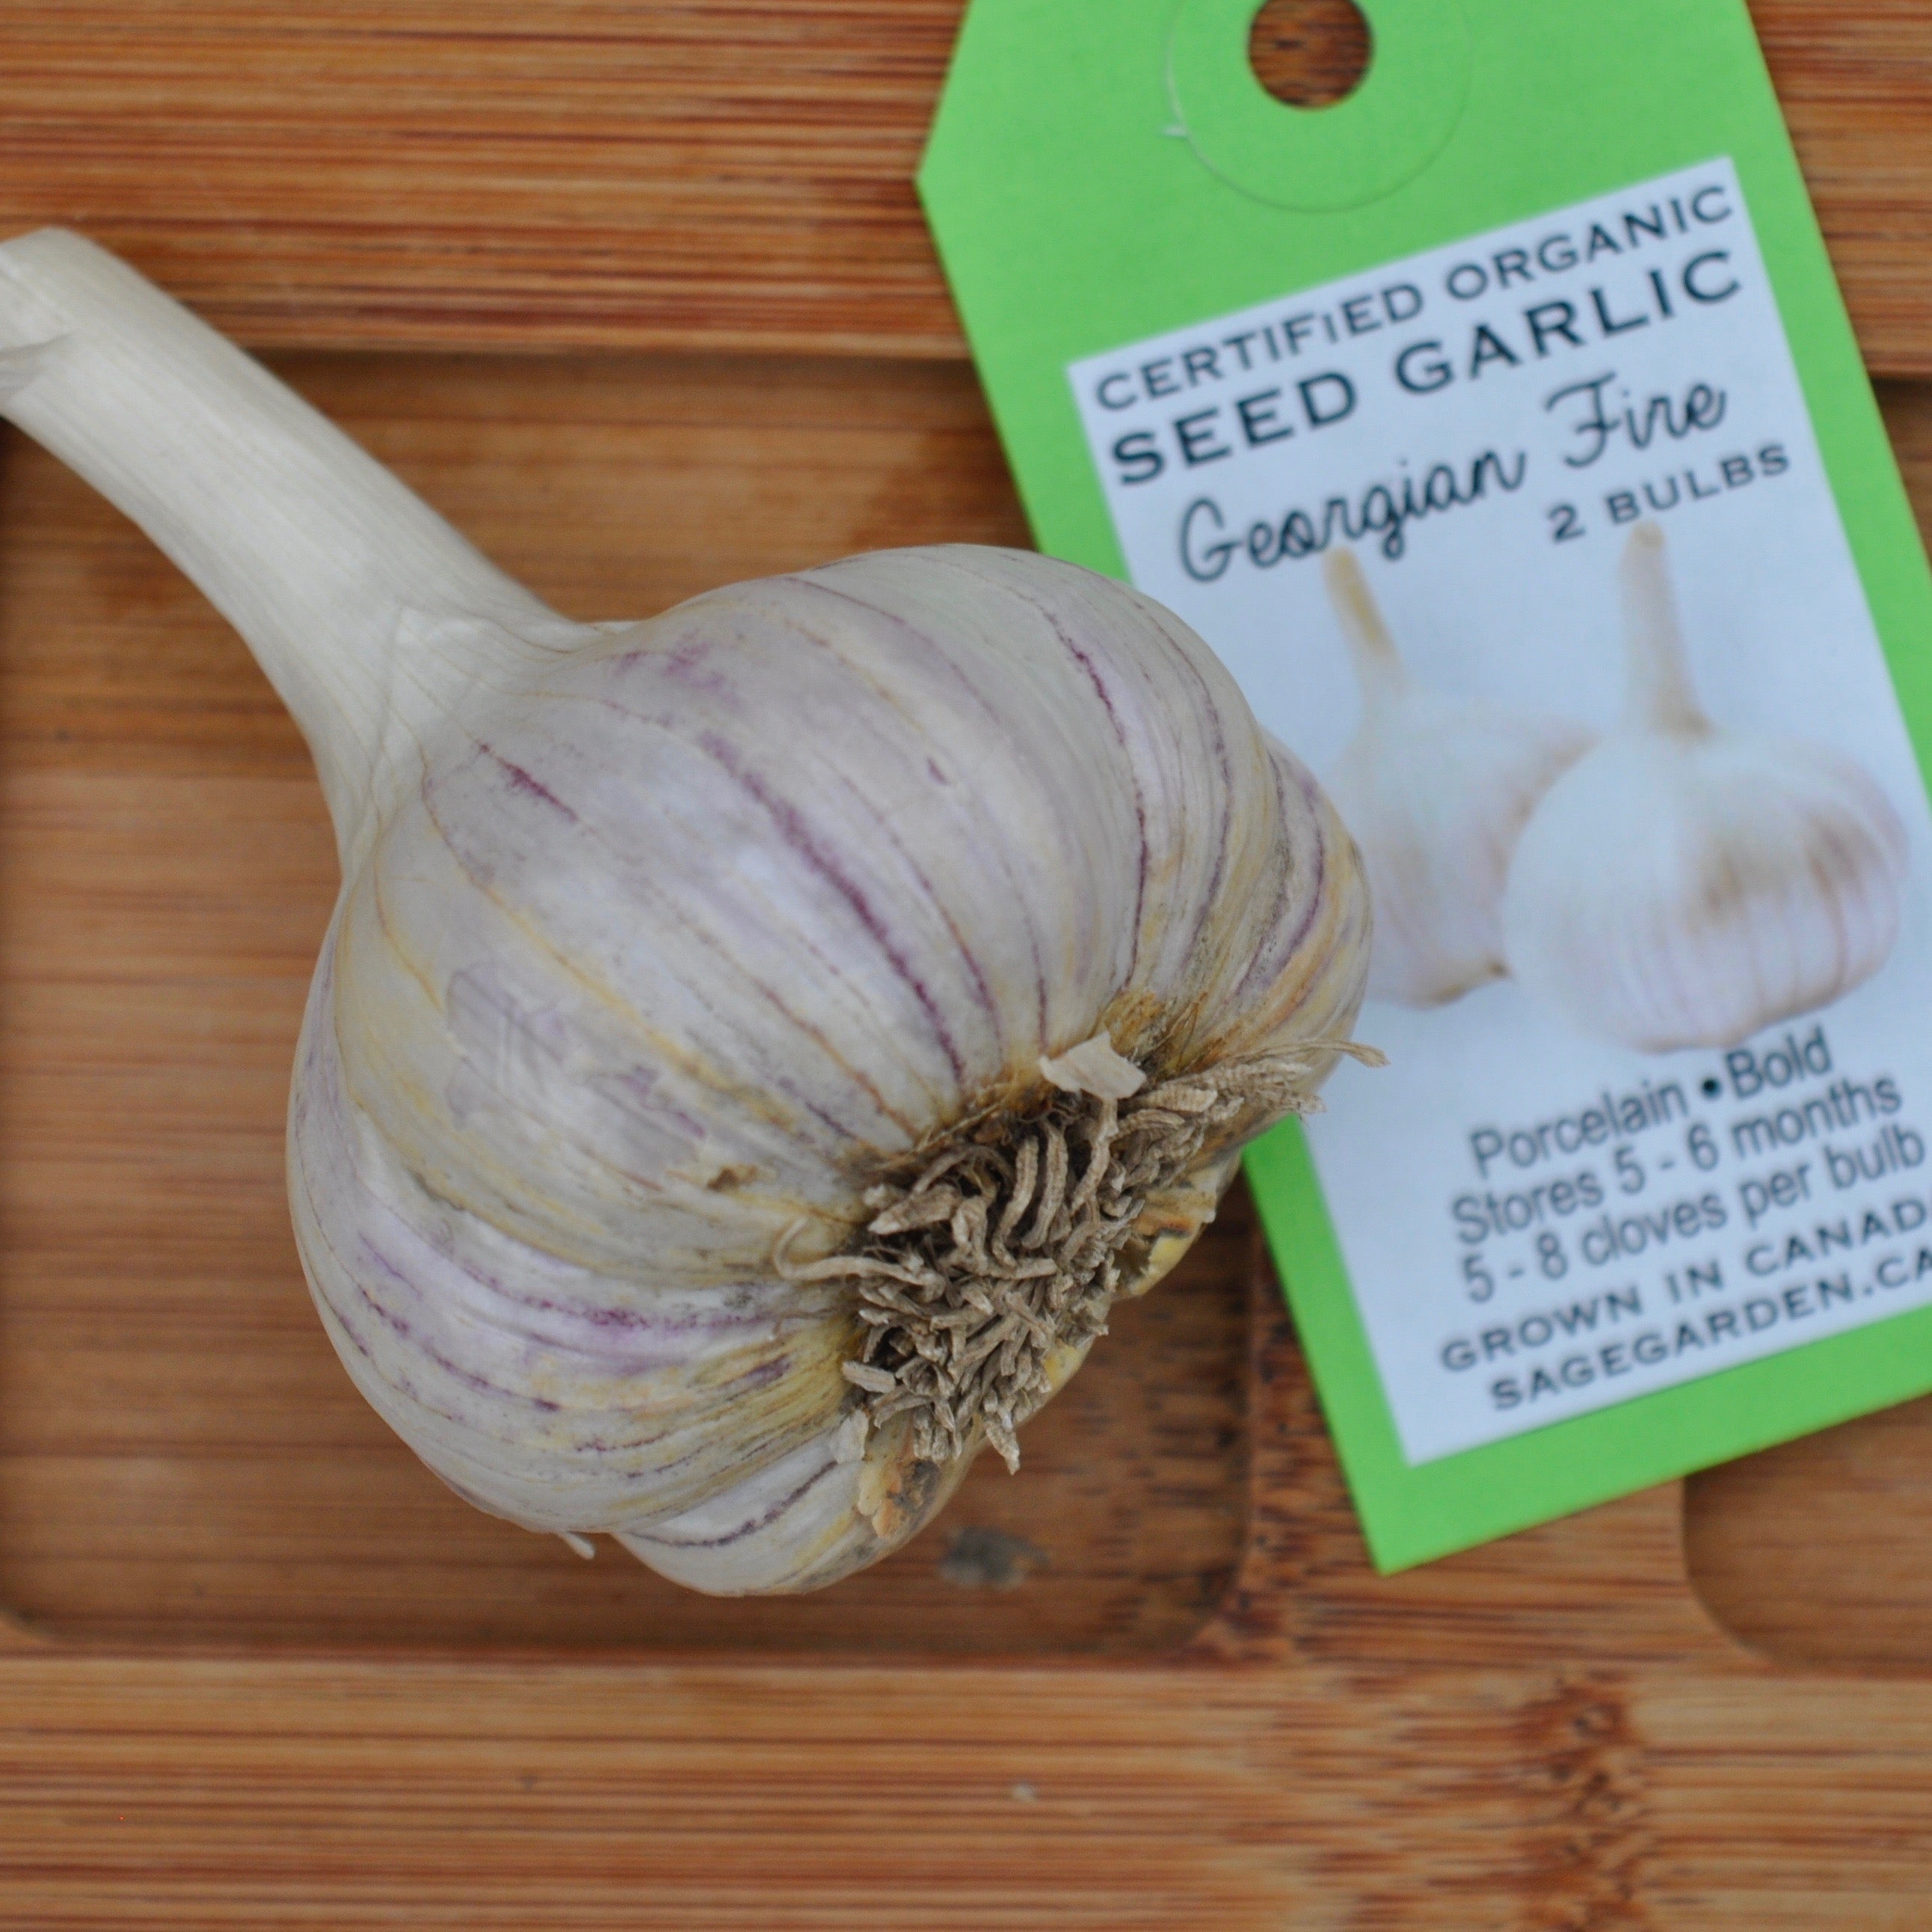 Digging your Garlic & Potatoes